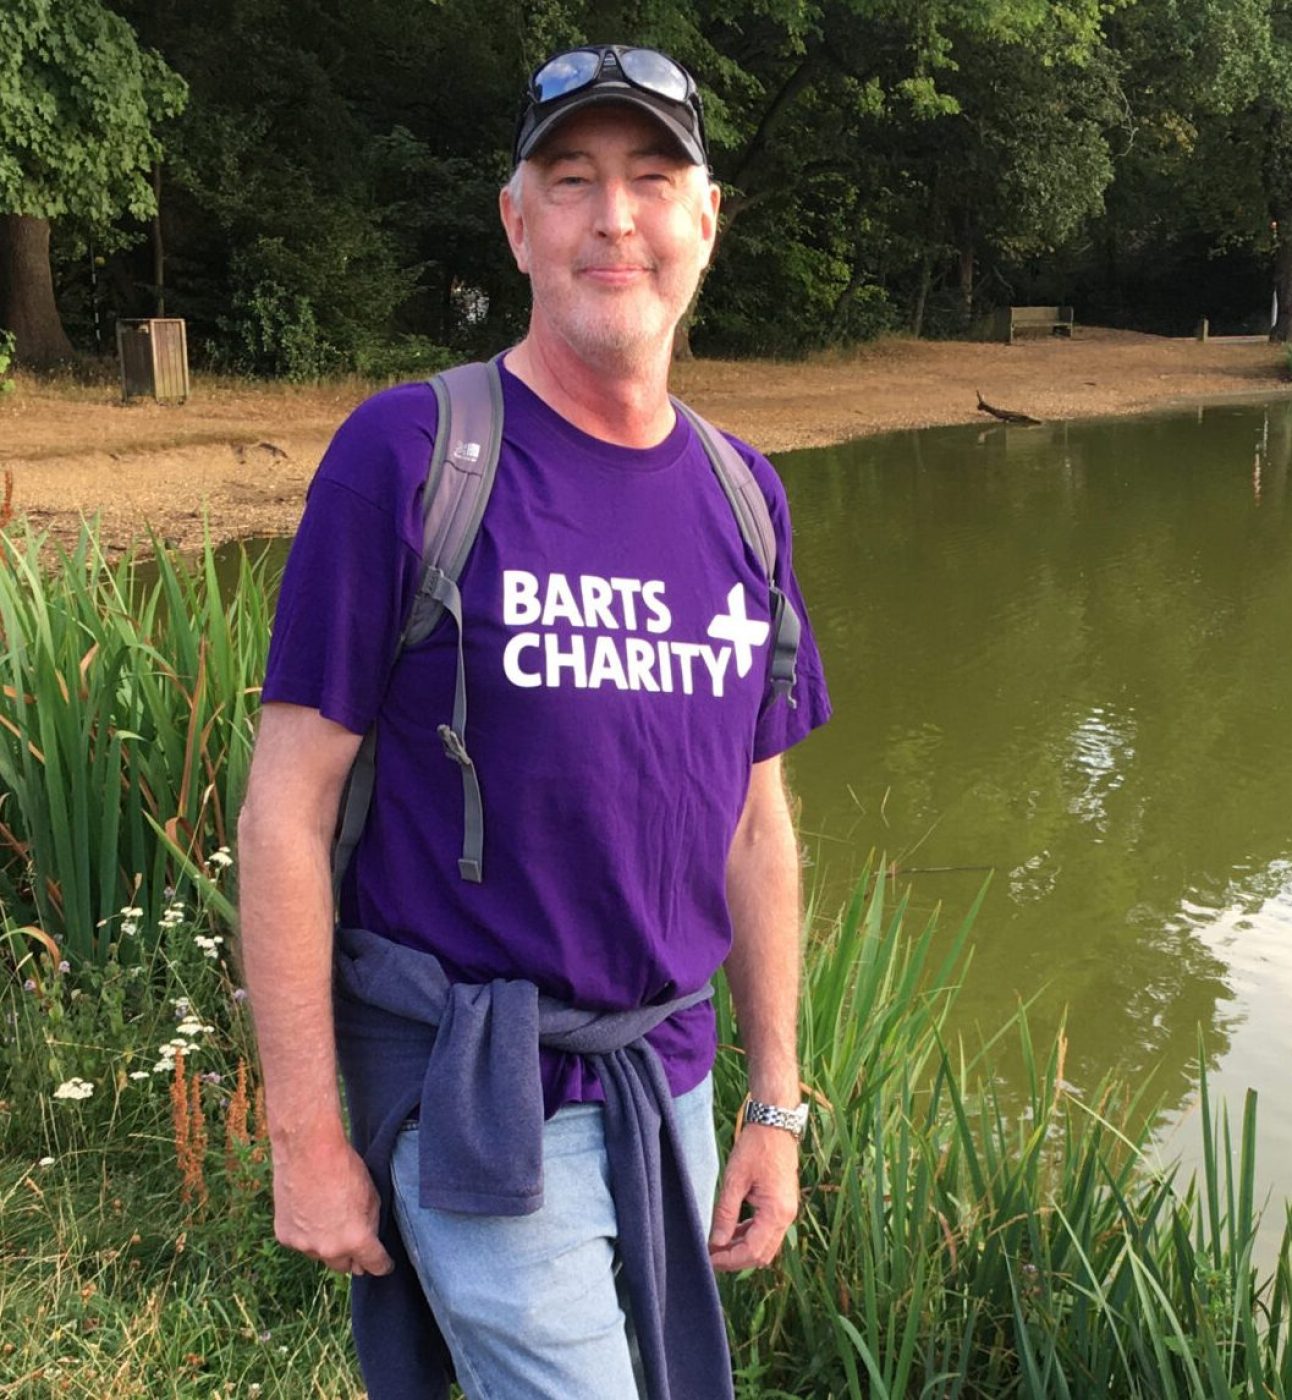 Julian Goode in a Barts Charity T shirt before his charity walk